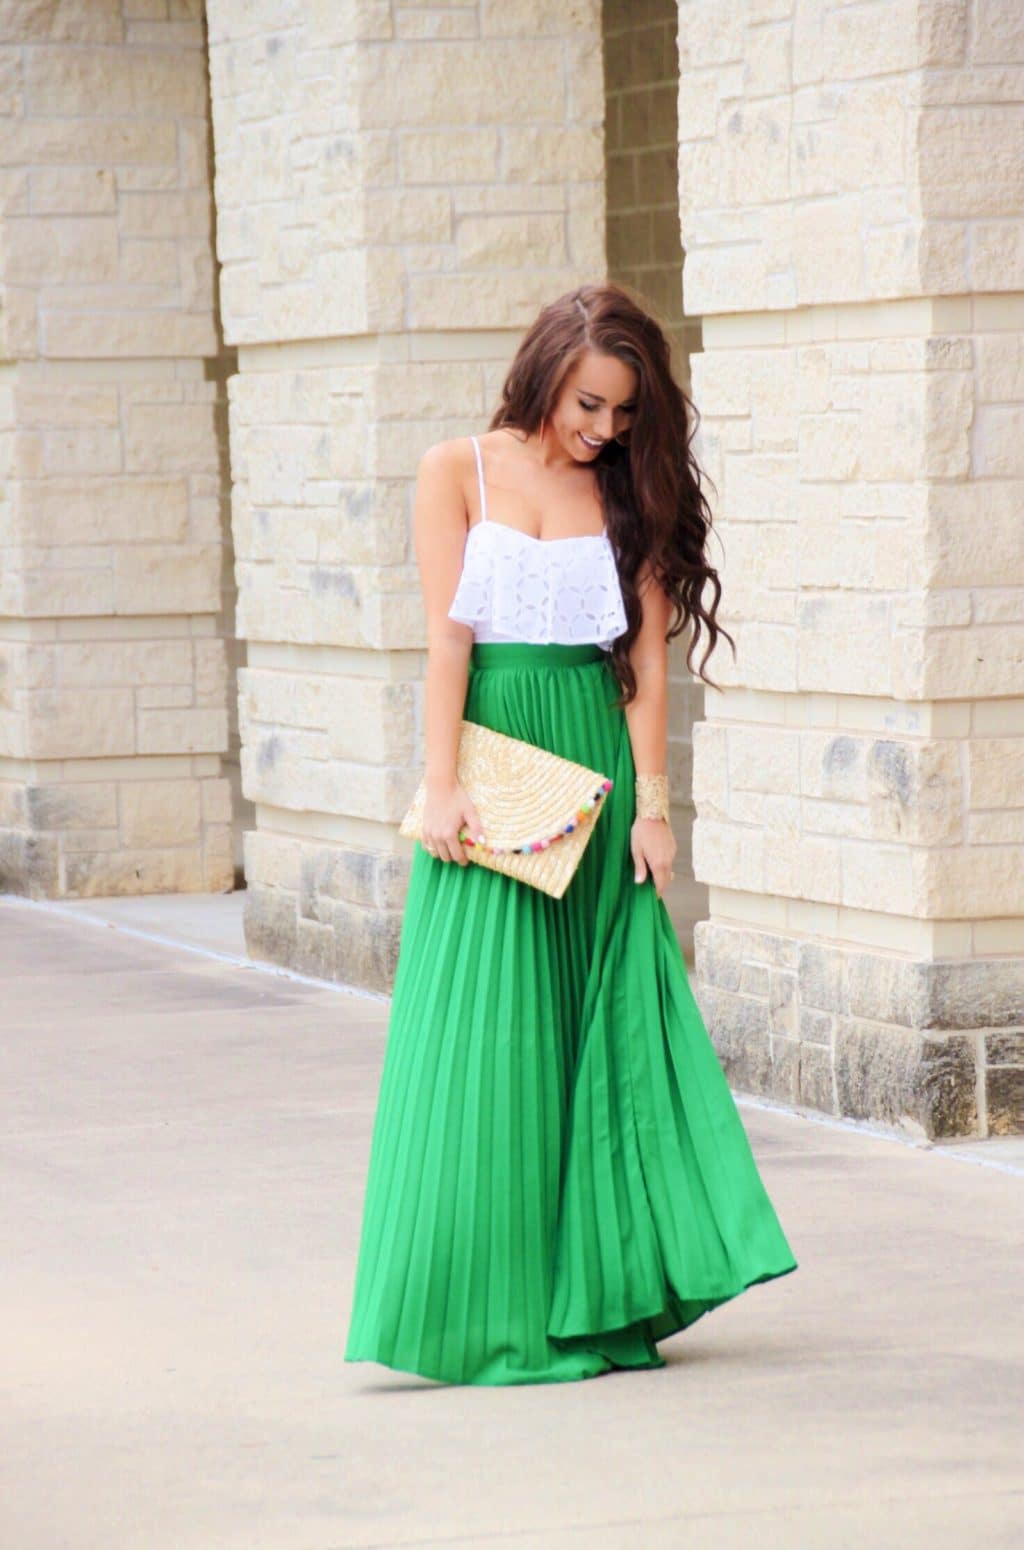 Que porter avec une jupe verte? (52 photos)